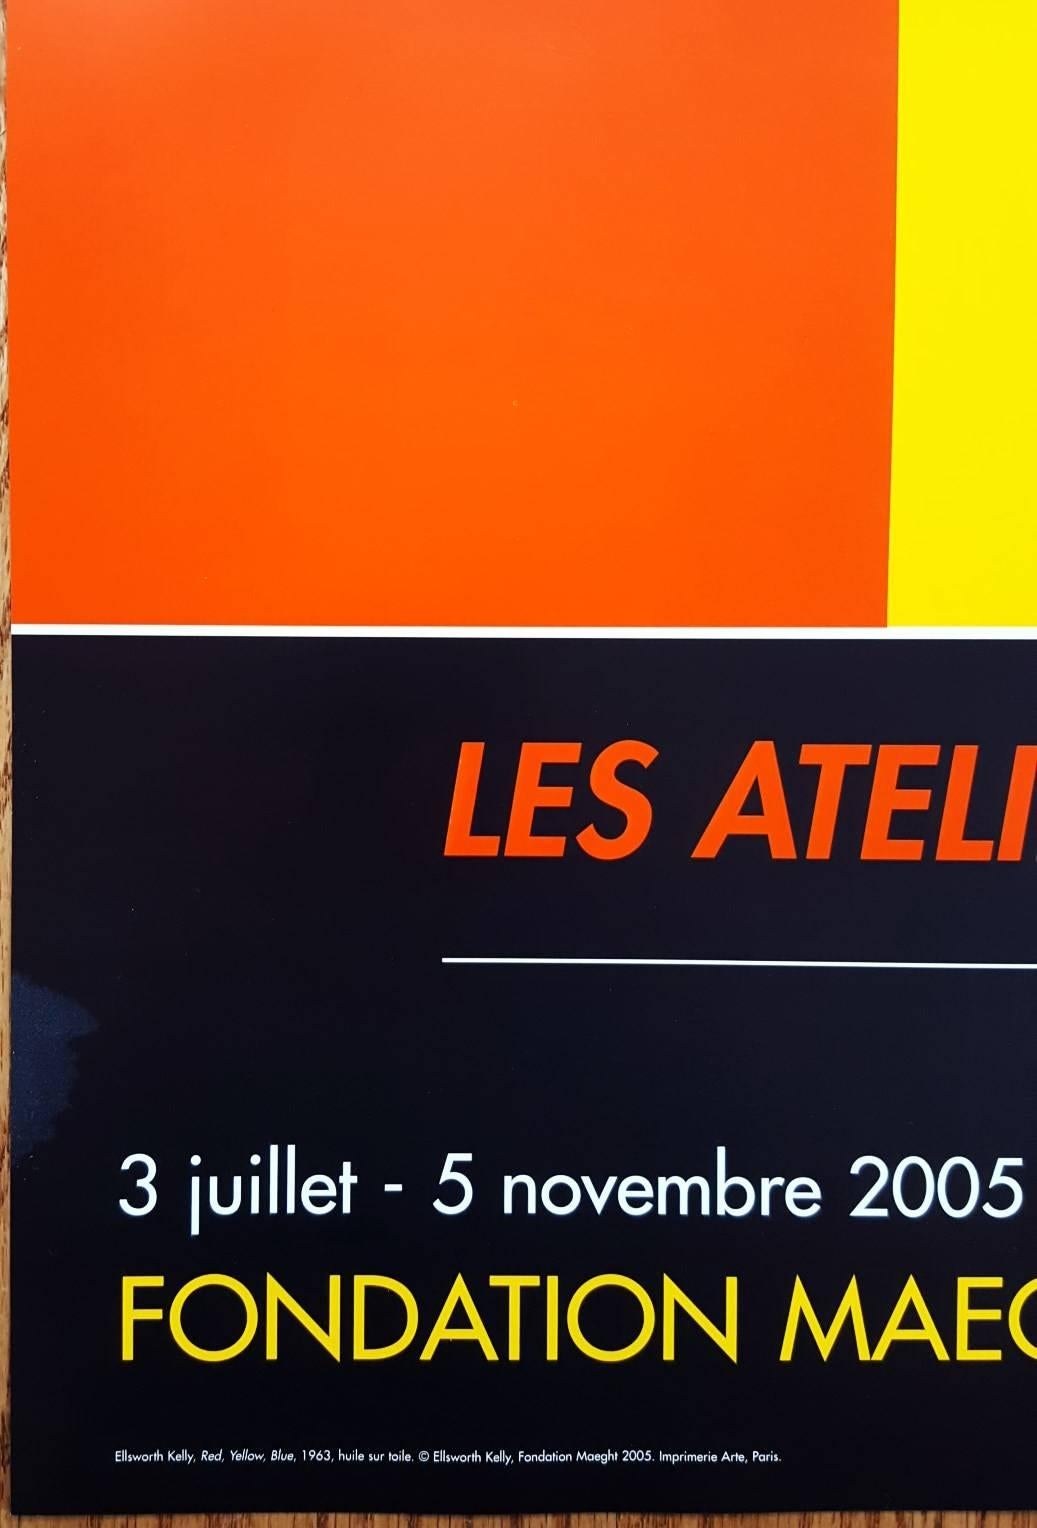 Fondation Maeght: Les Ateliers de La Modernite (Red, Yellow, Blue) - Print by (after) Ellsworth Kelly